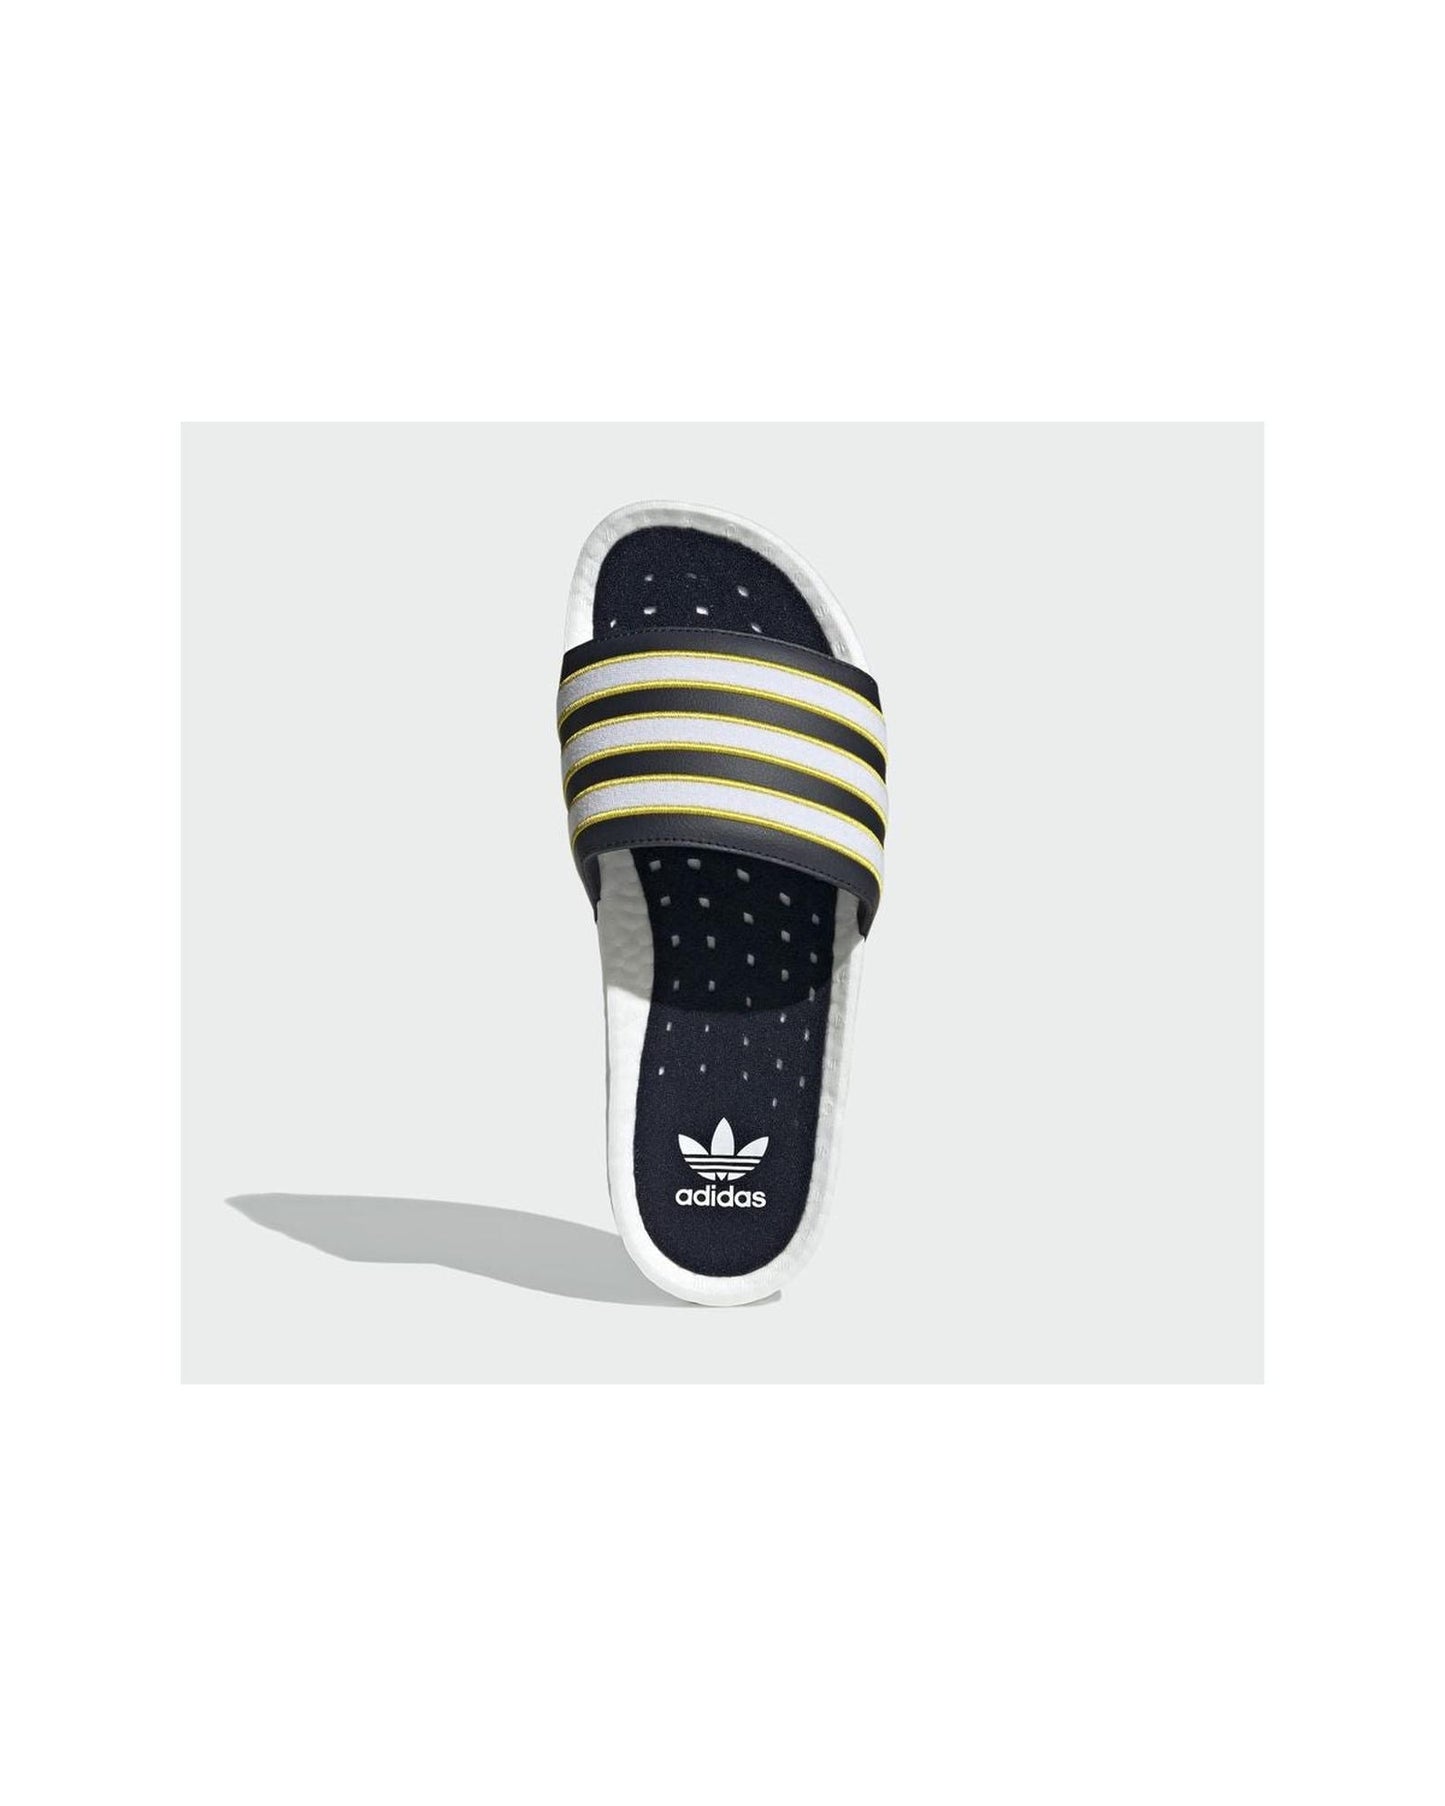 Boost Slides for Men by Adidas Originals - 12 US